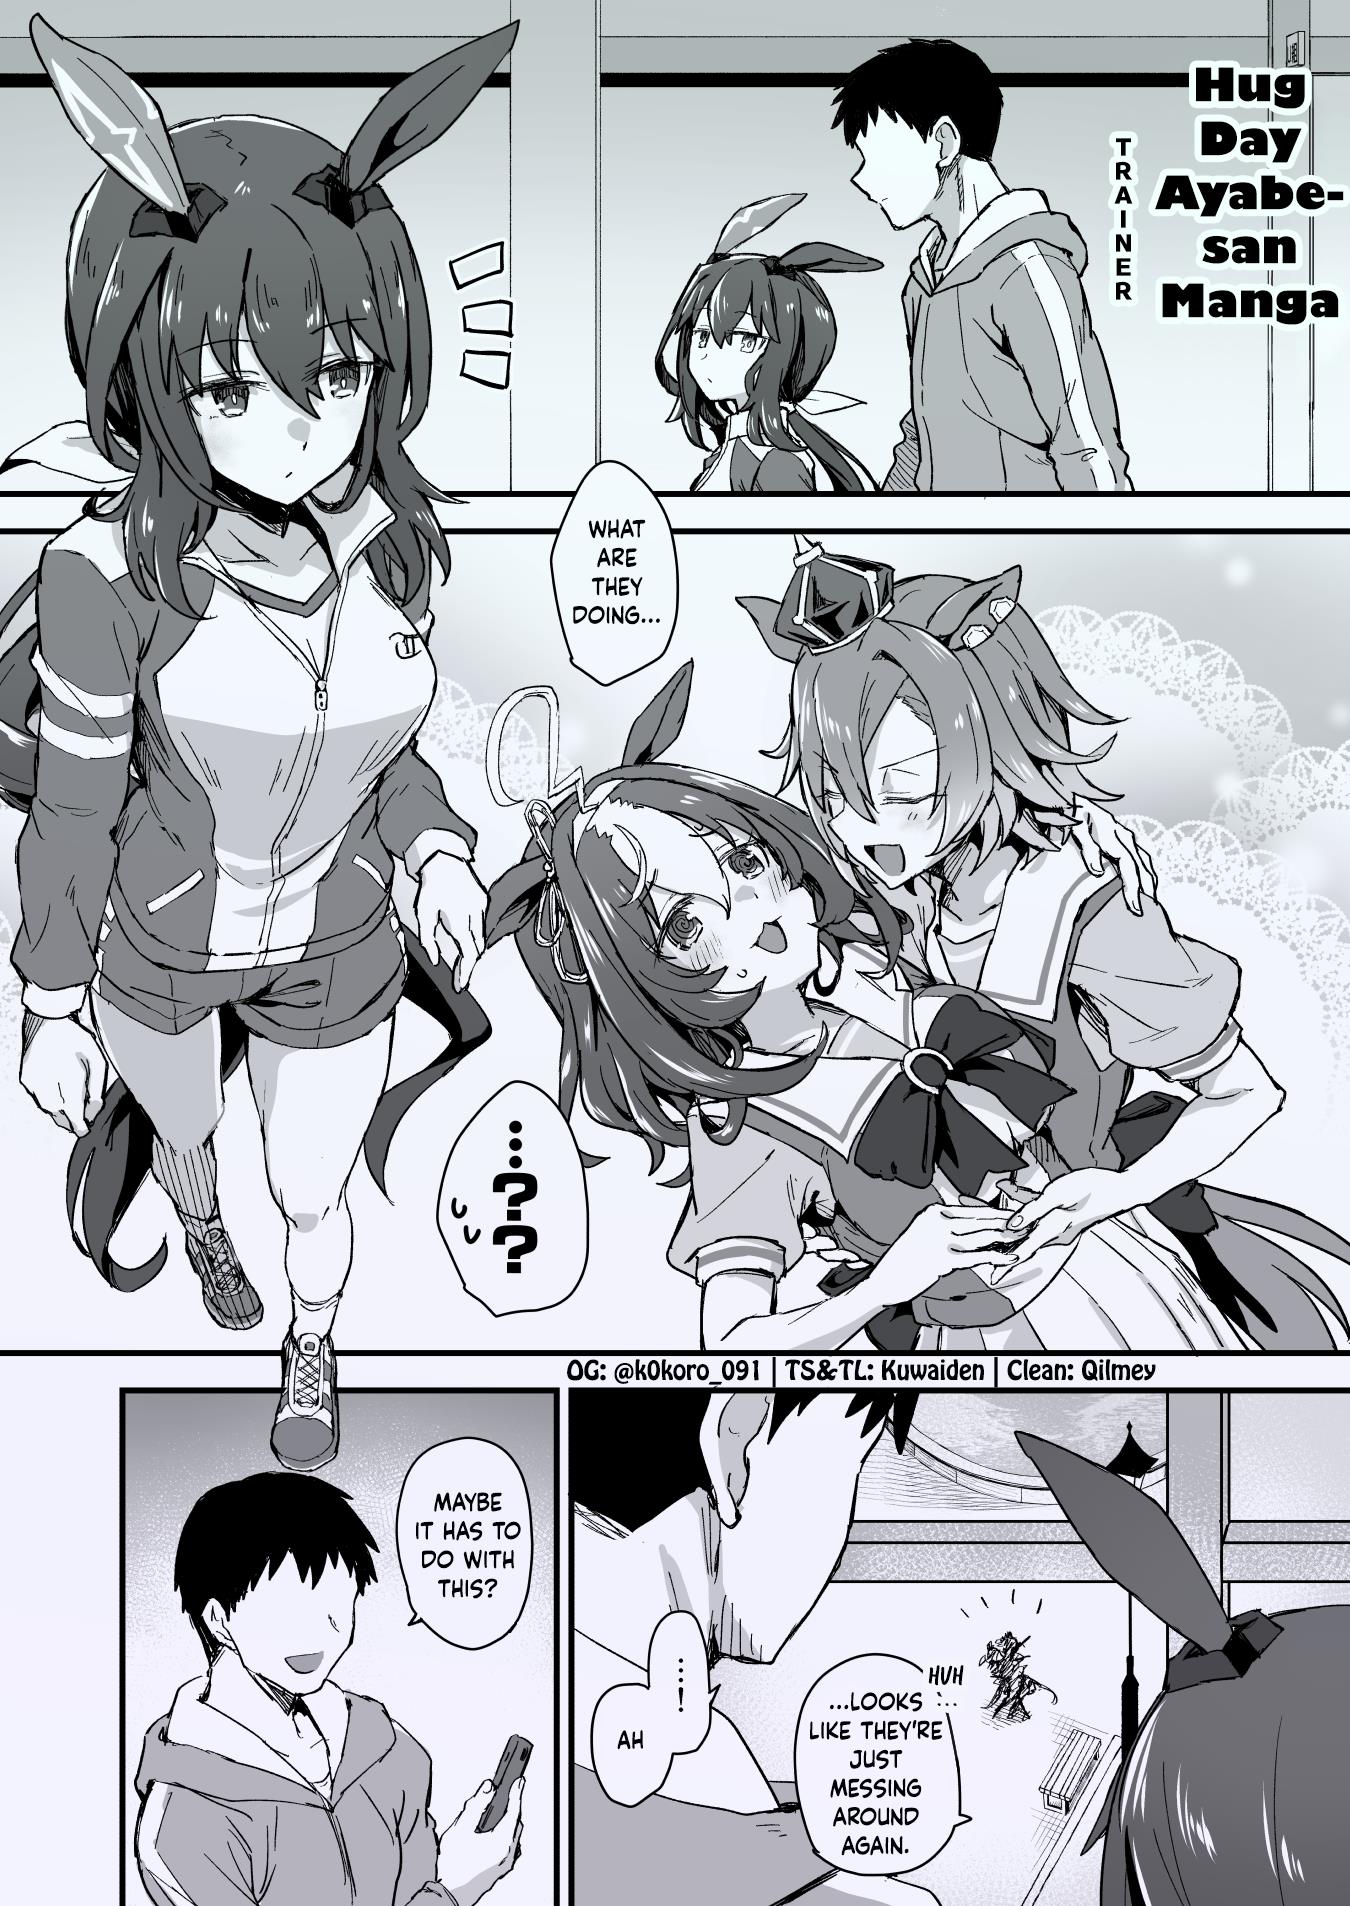 Kokoro-Sensei's Umamusume Shorts (Doujinshi) Chapter 27: Hug Day Ayabe-San Manga - Picture 1